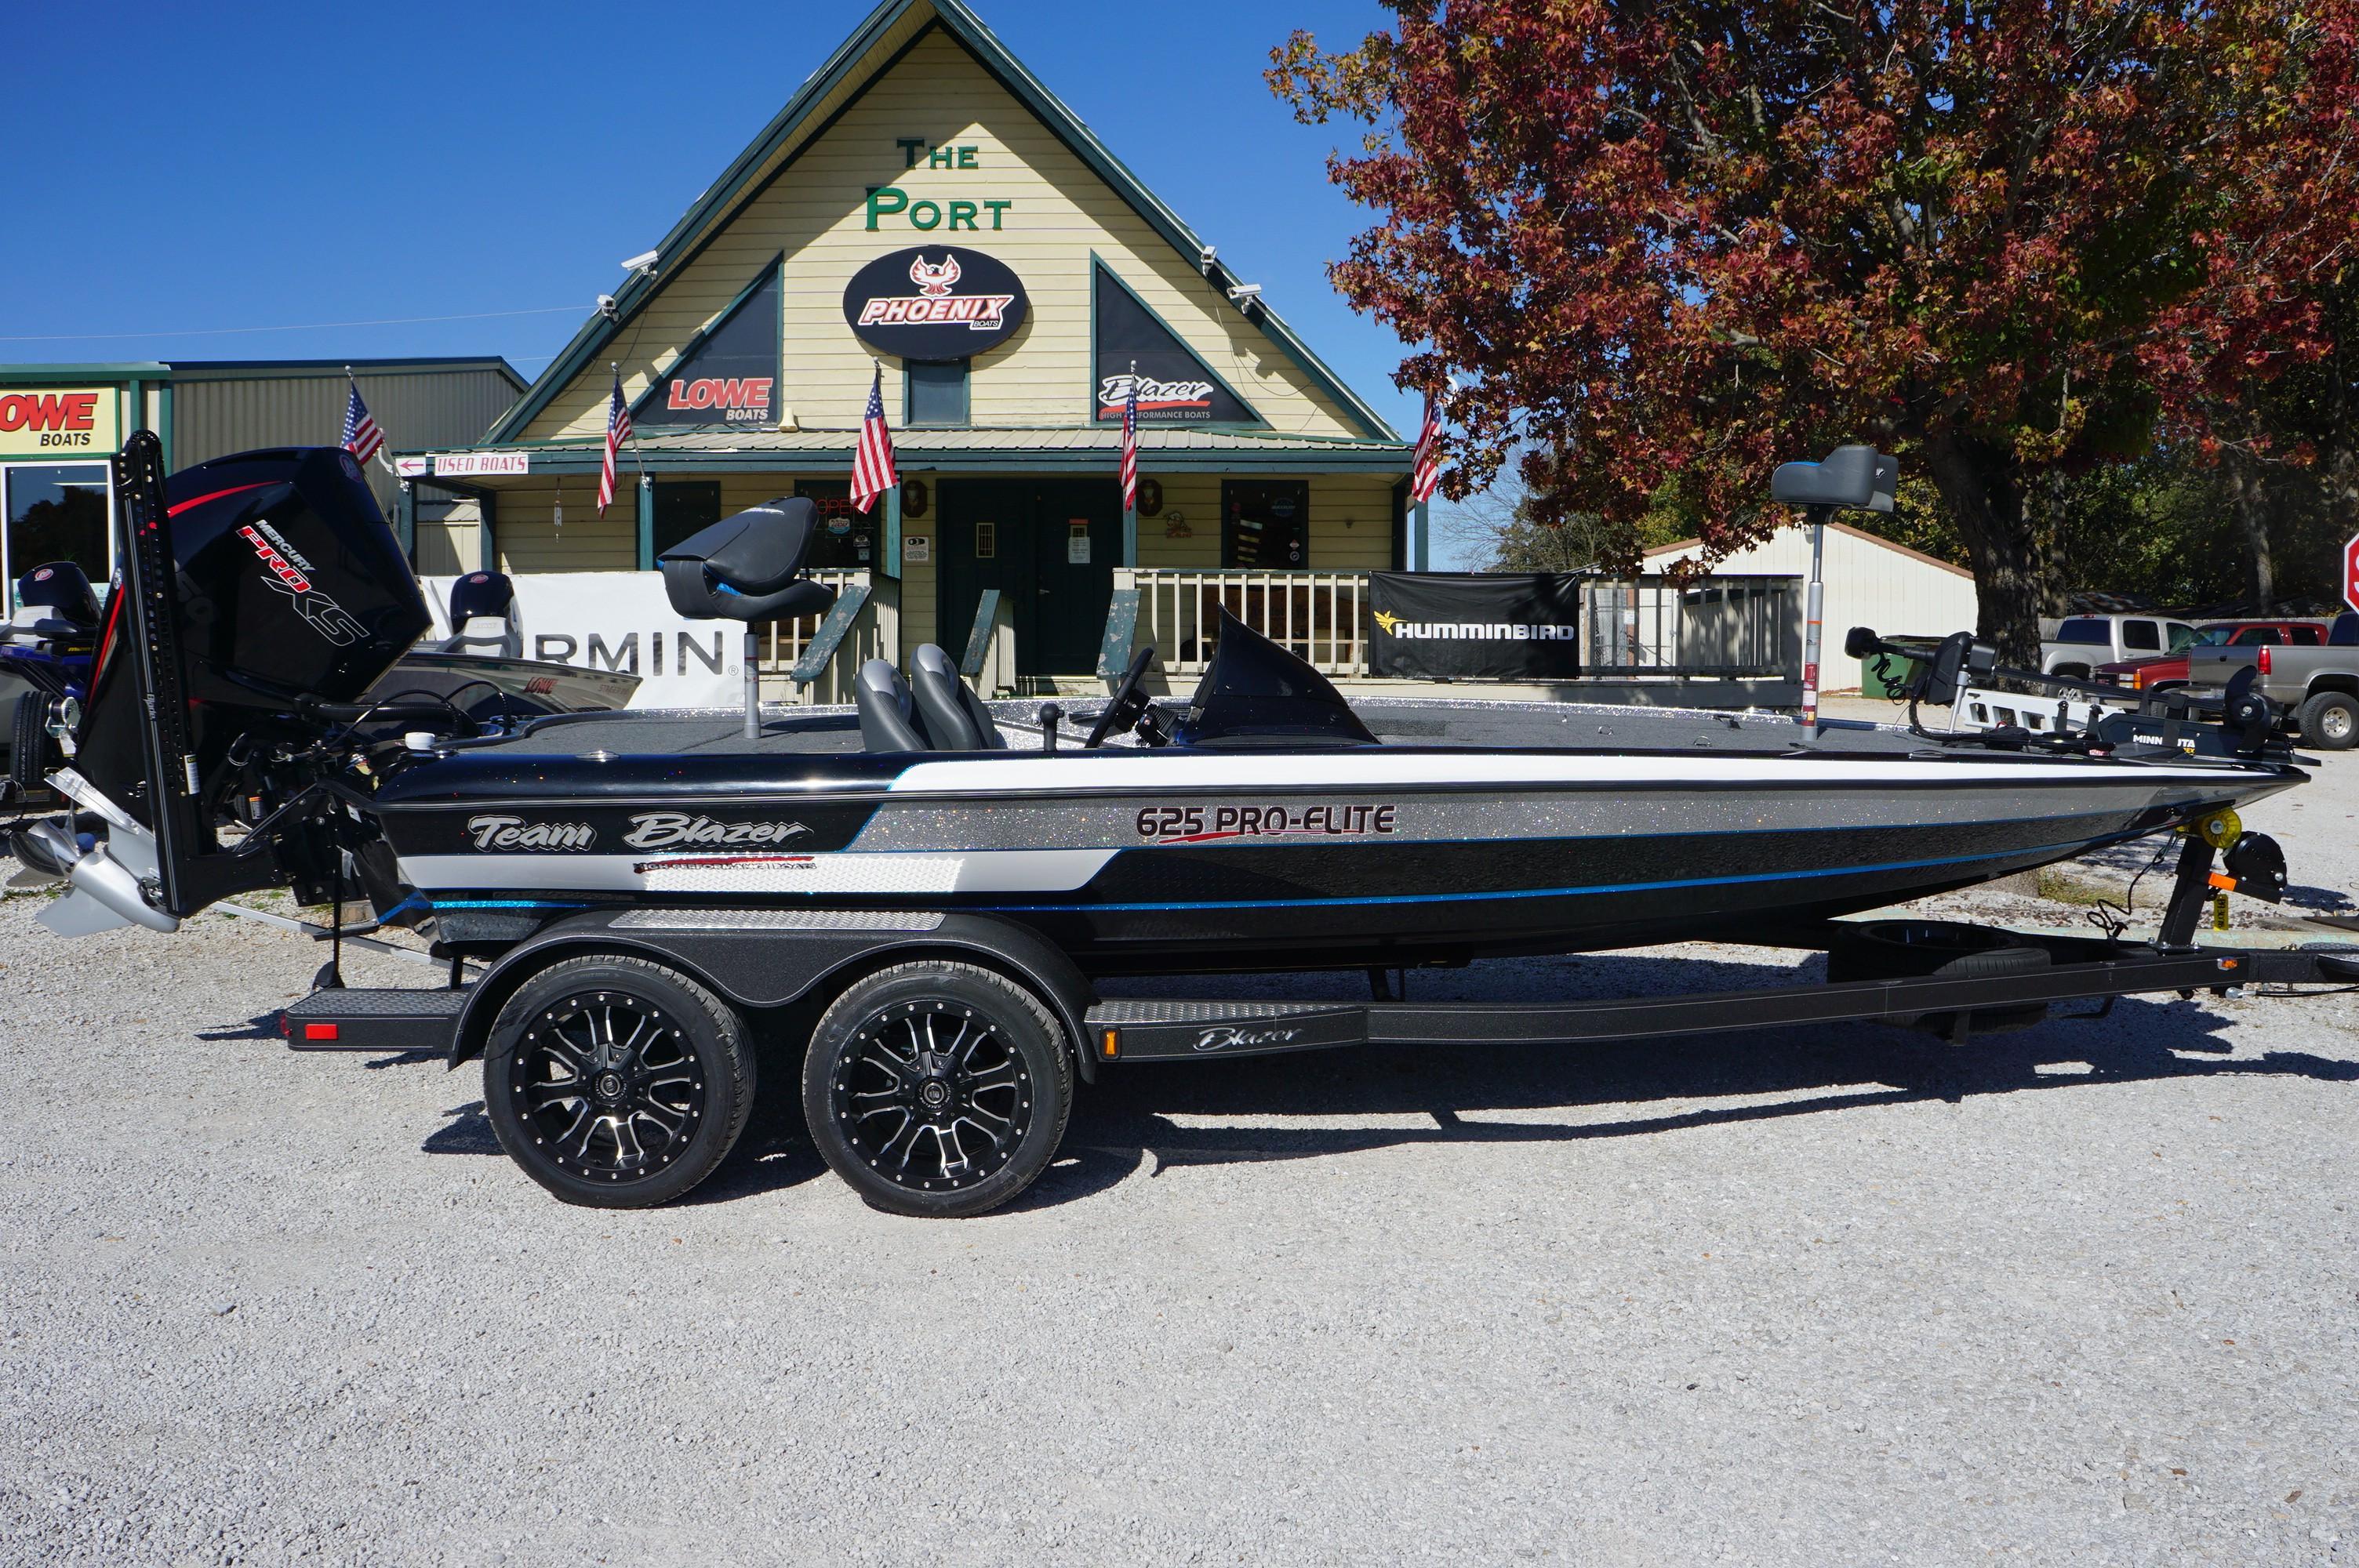 2020 Blazer 625 Pro Elite, Warsaw Missouri - boats.com